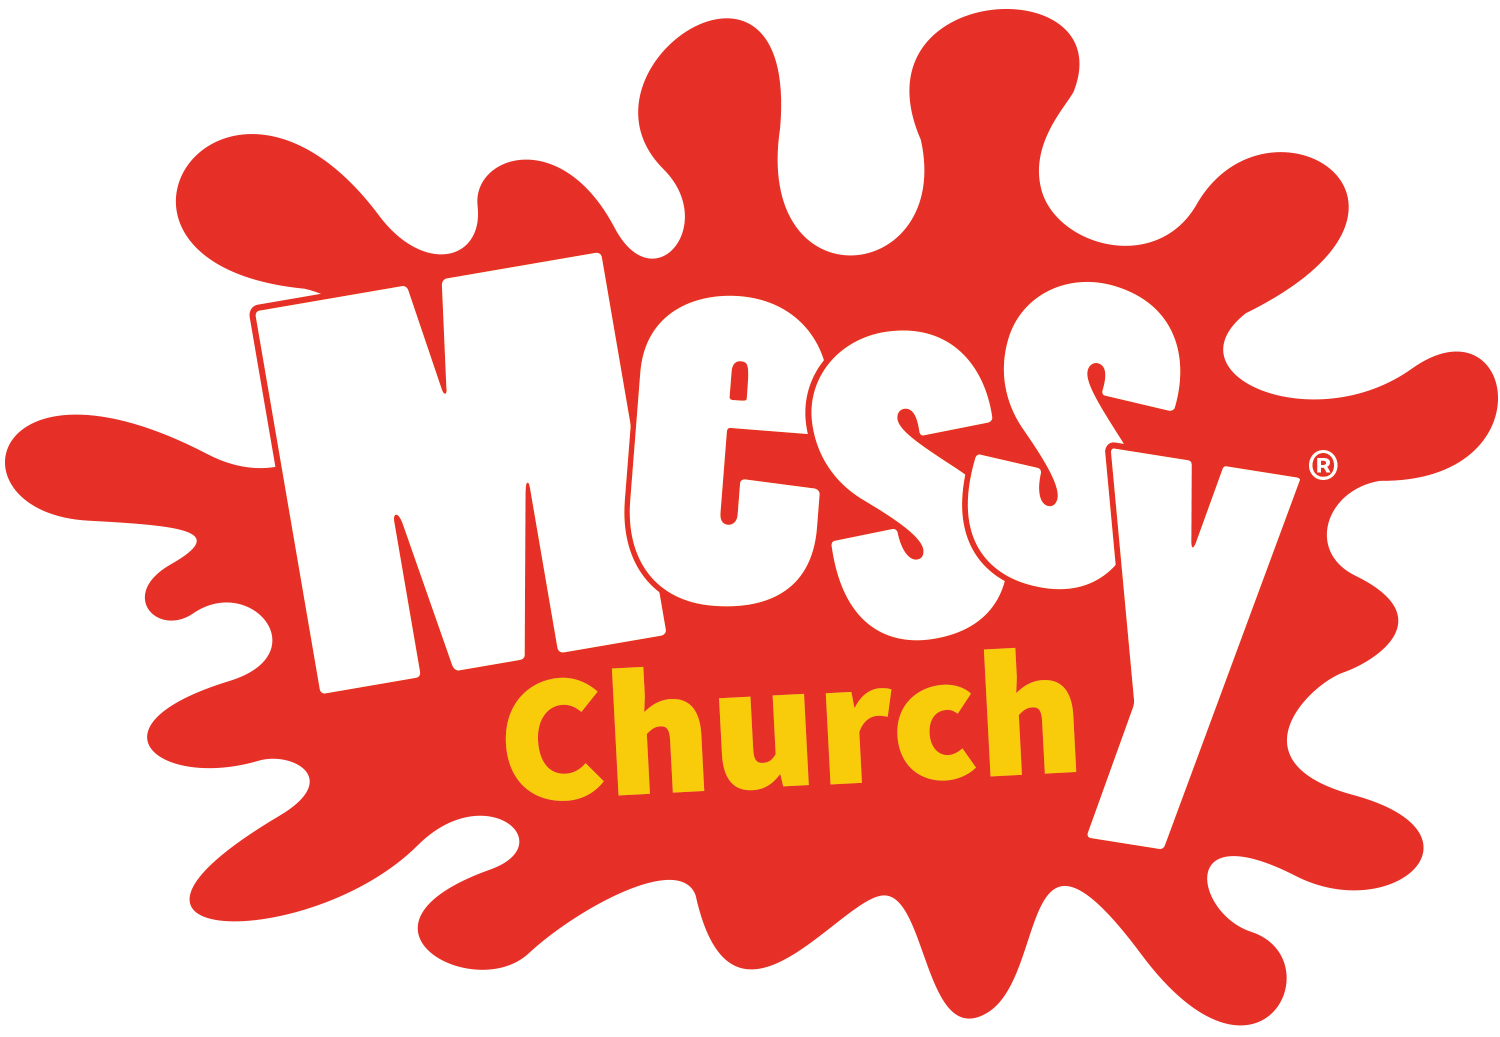 The Messy Church logo